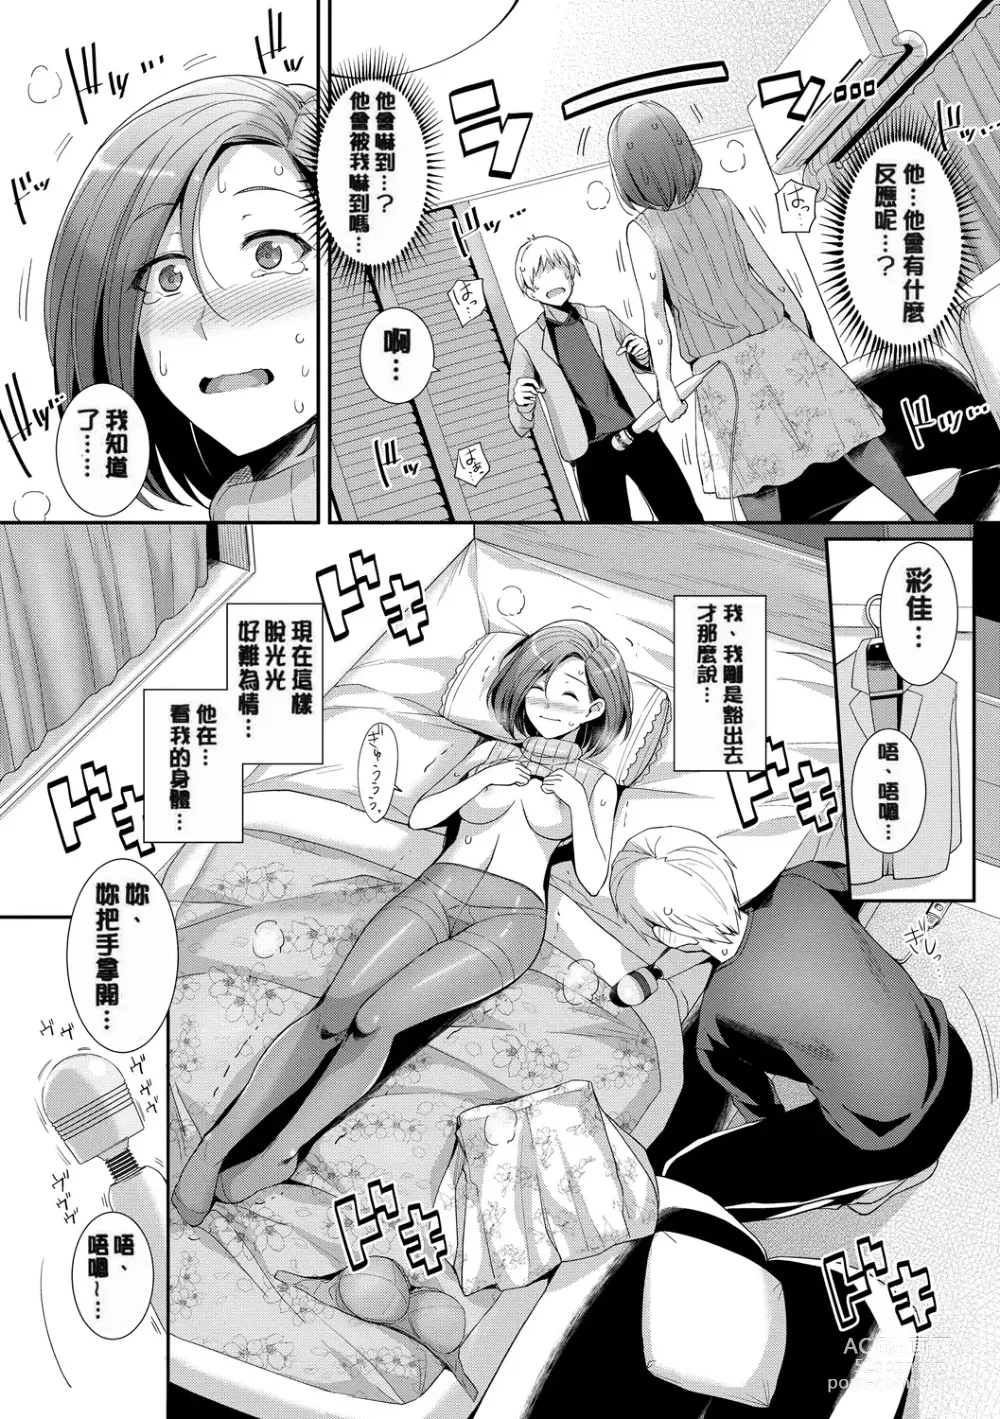 Page 181 of manga 甘色バニラ (uncensored)